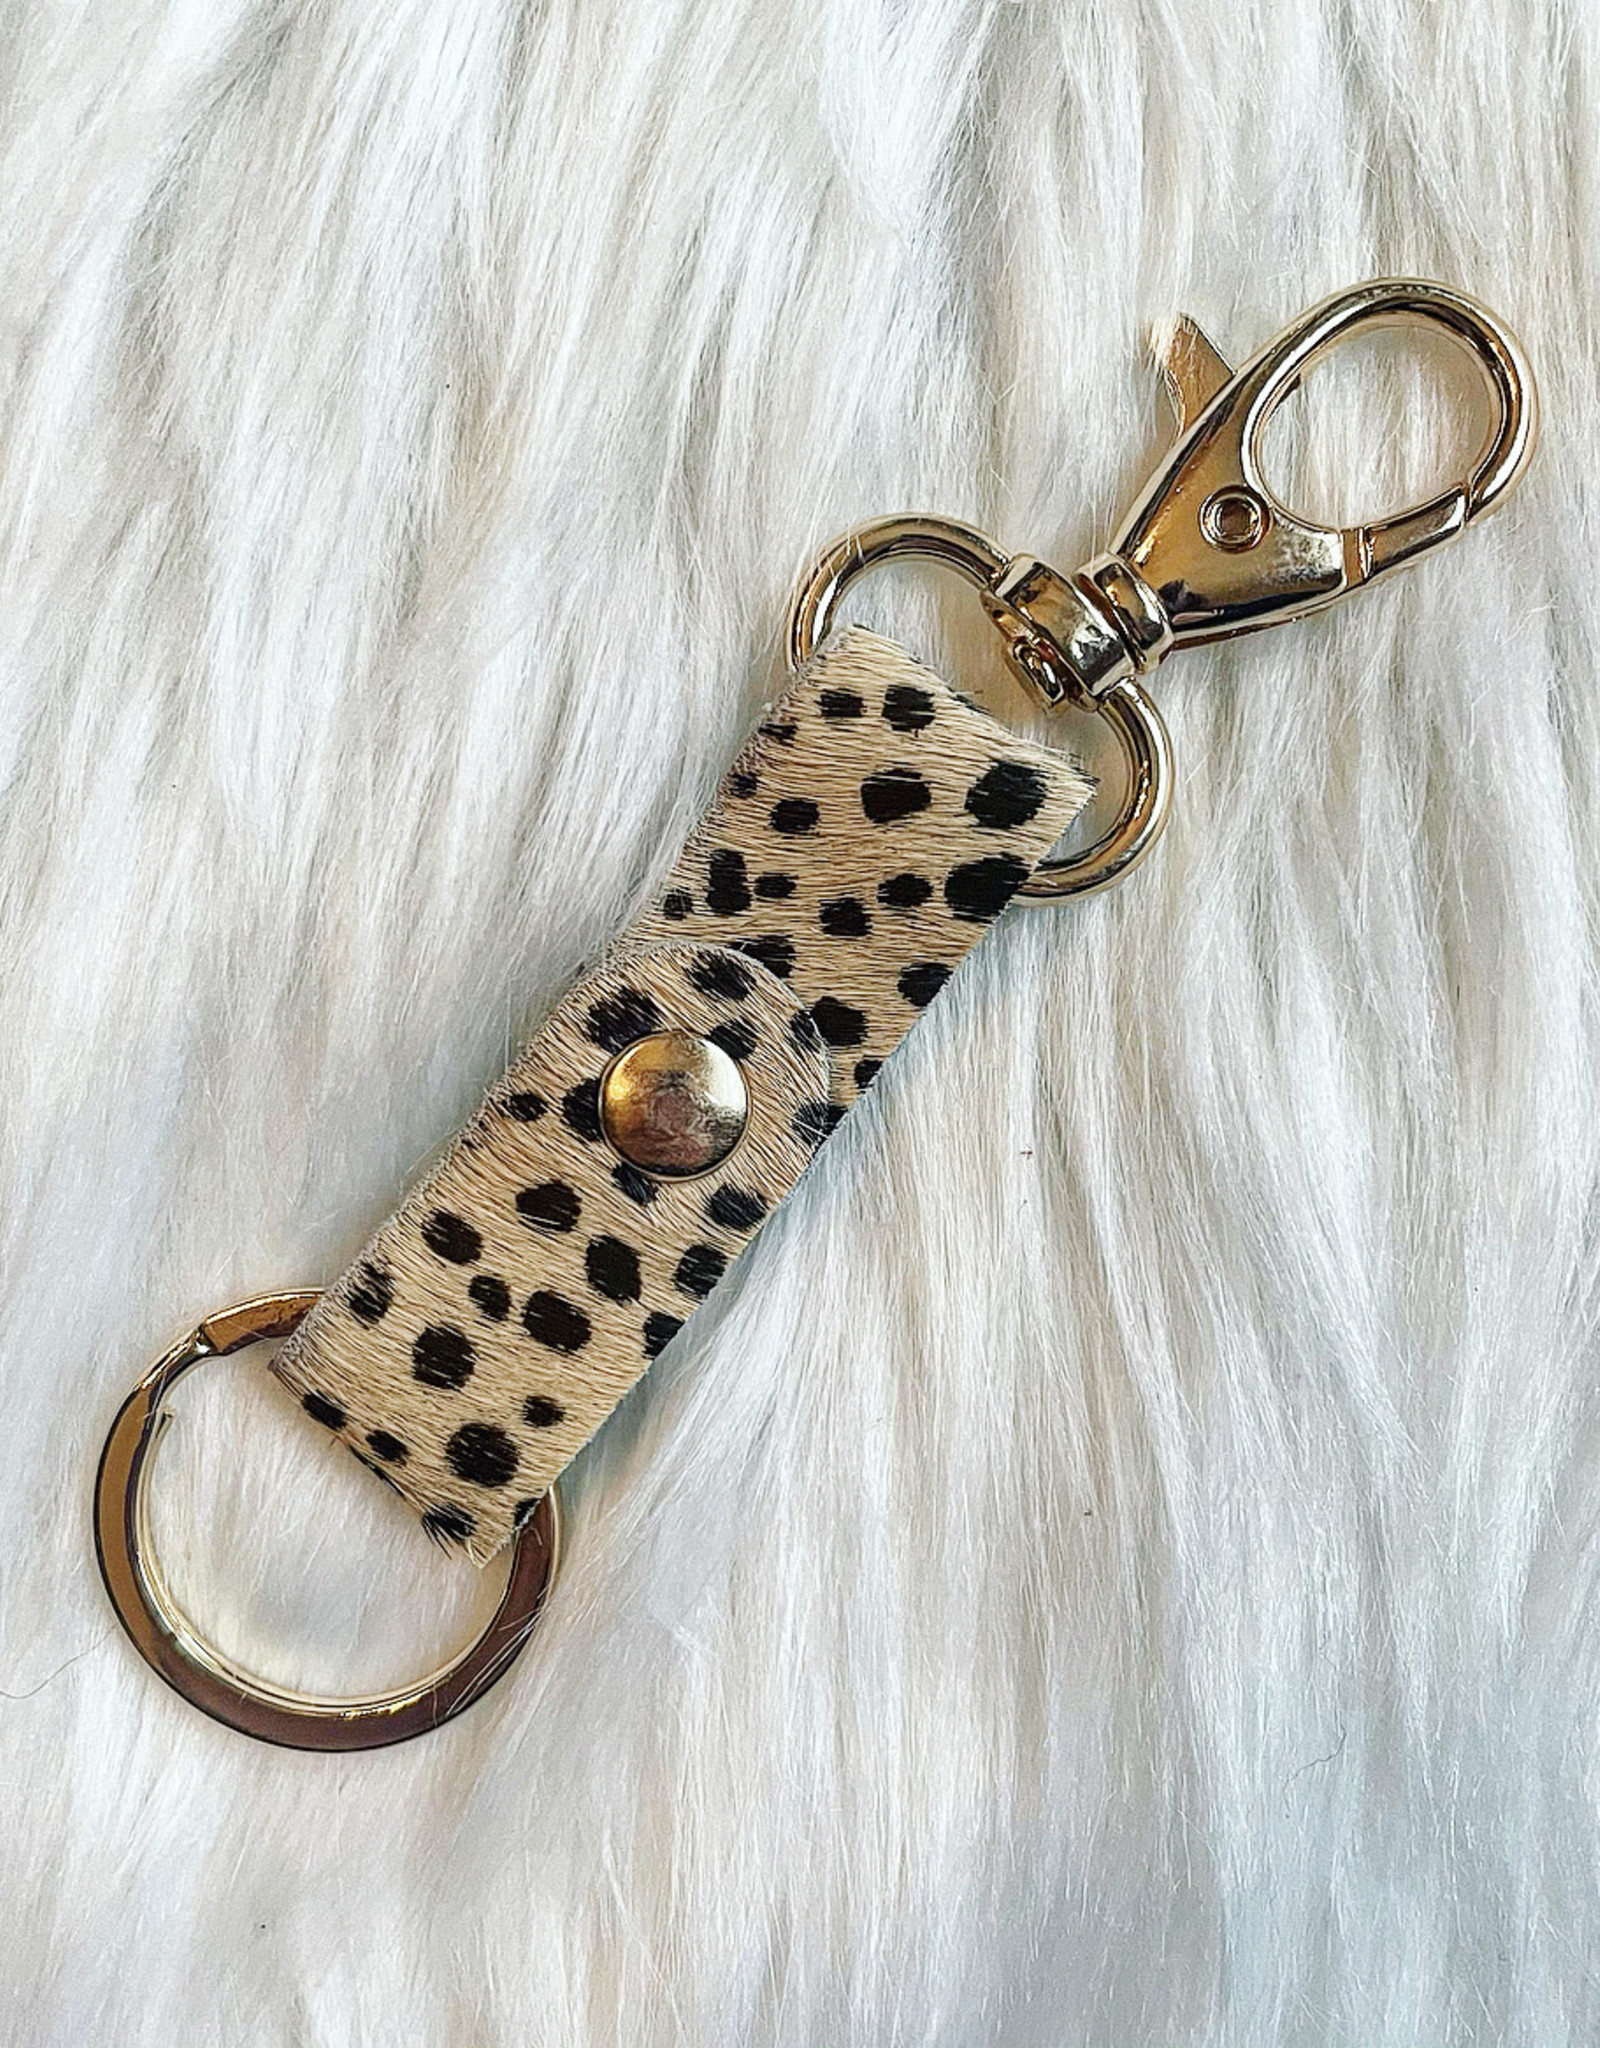 Mini Strap Key Chain in Cheetah